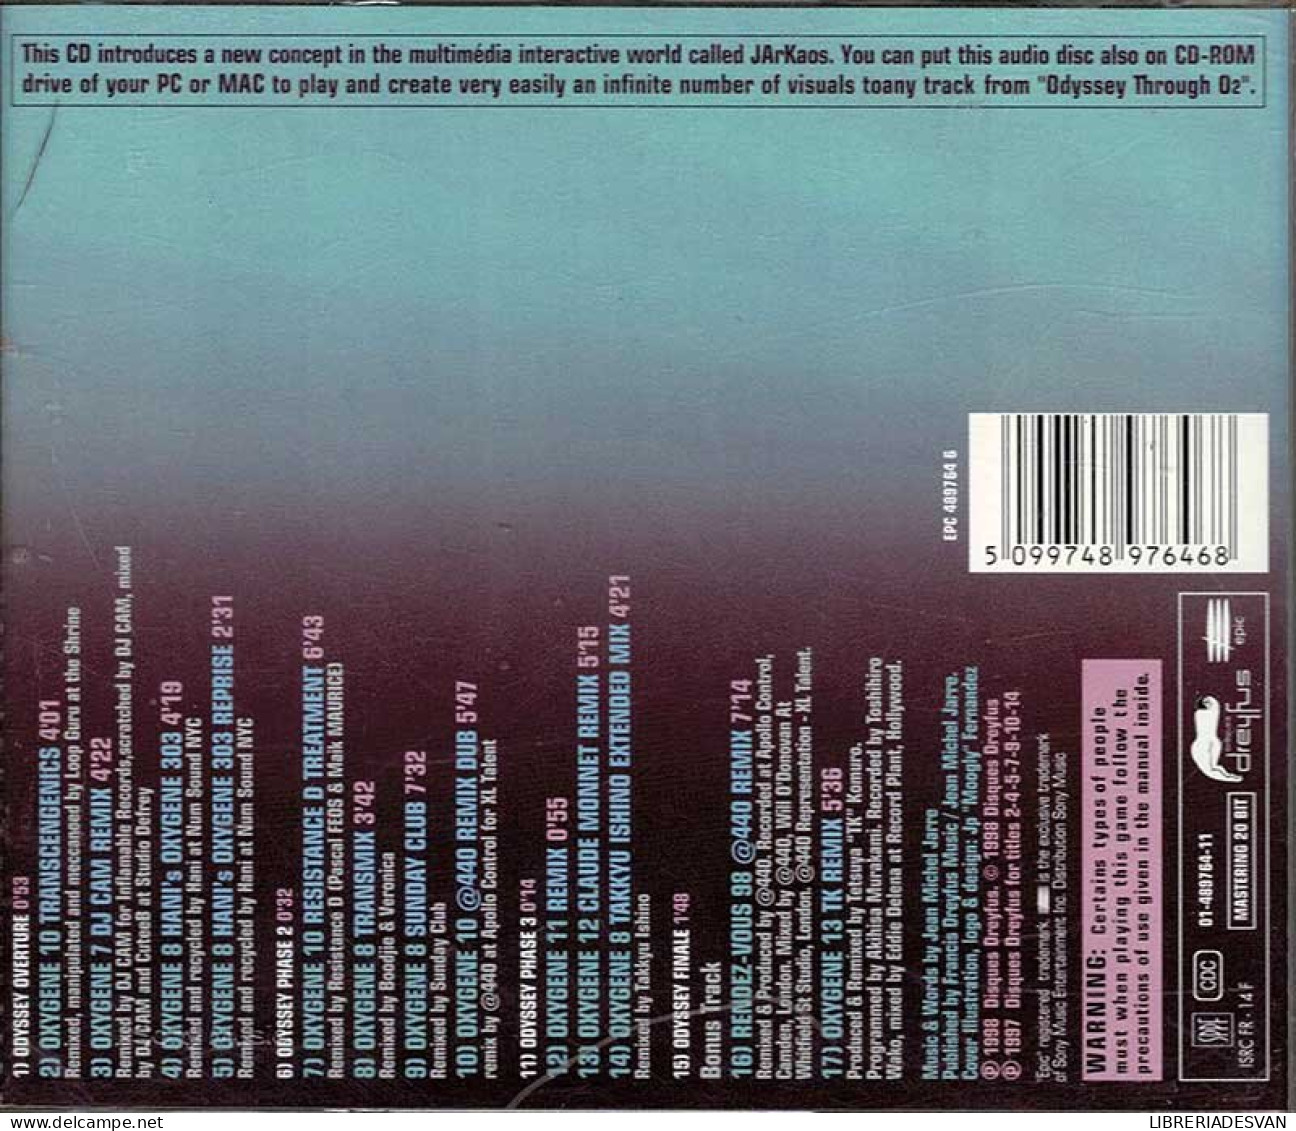 Jean Michel Jarre - Odyssey Through O2. CD - Dance, Techno & House